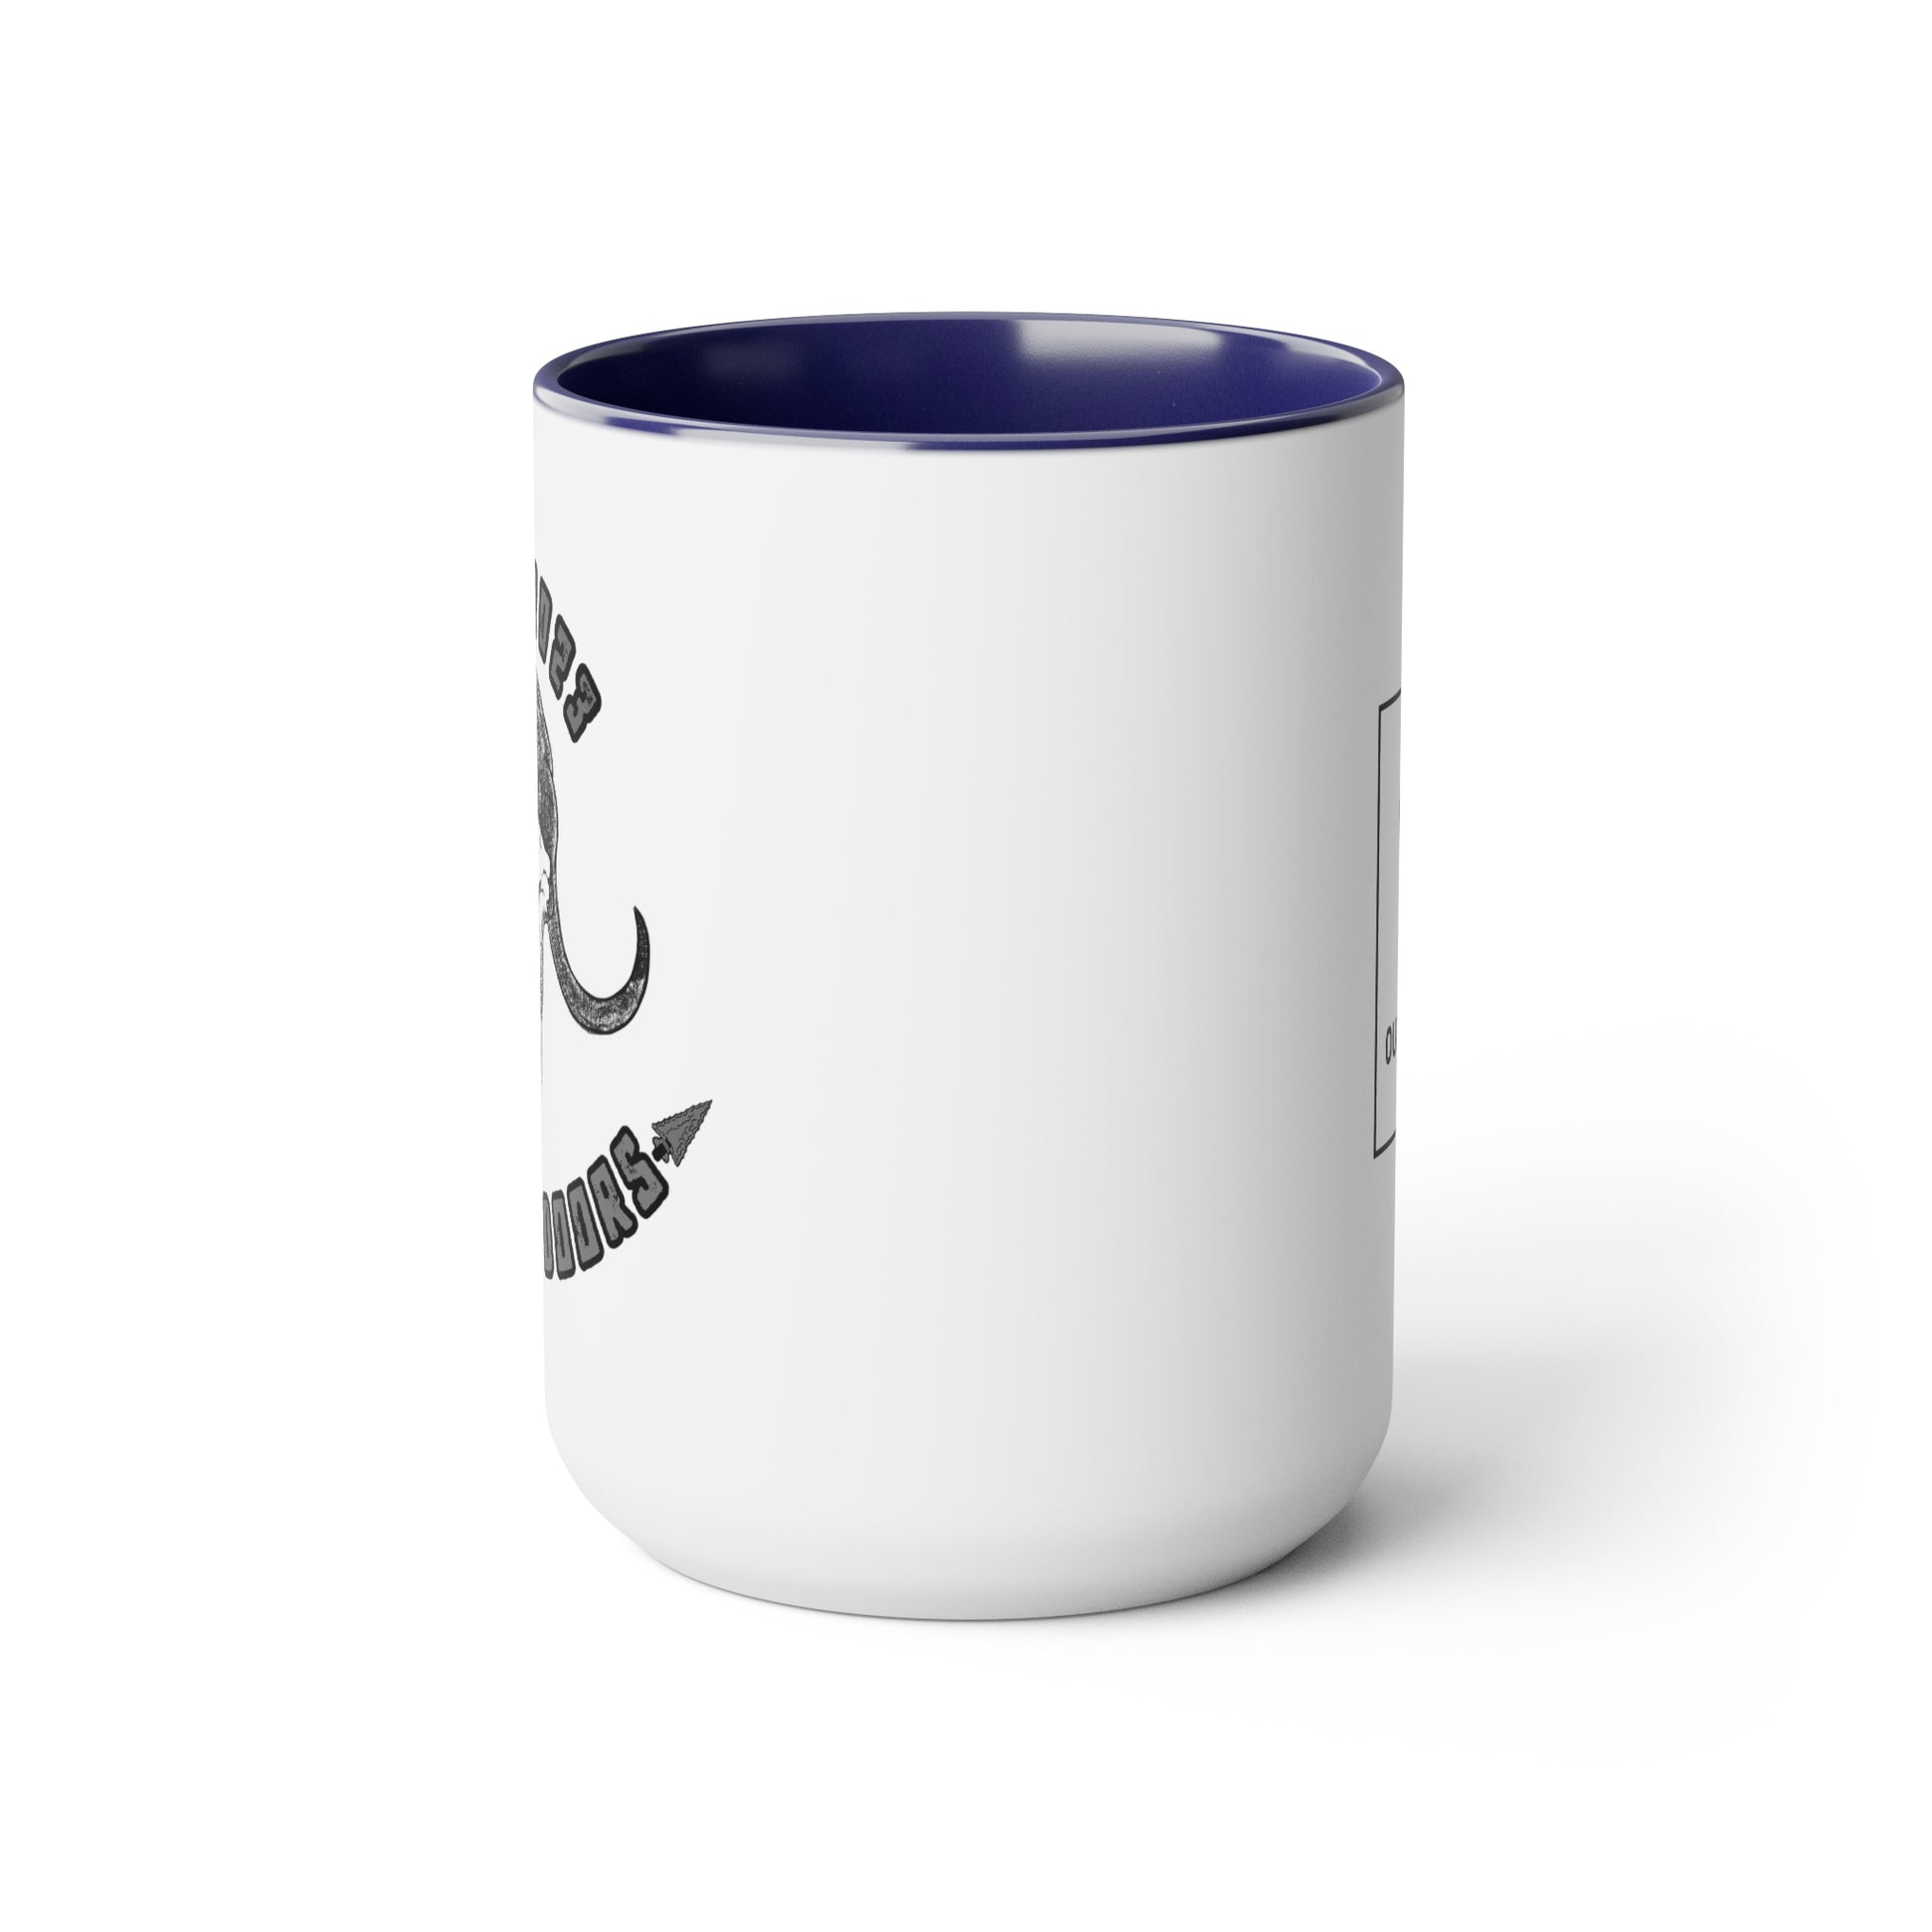 Musk ox Two-Tone Coffee Mugs, 15oz - 907Outdoors